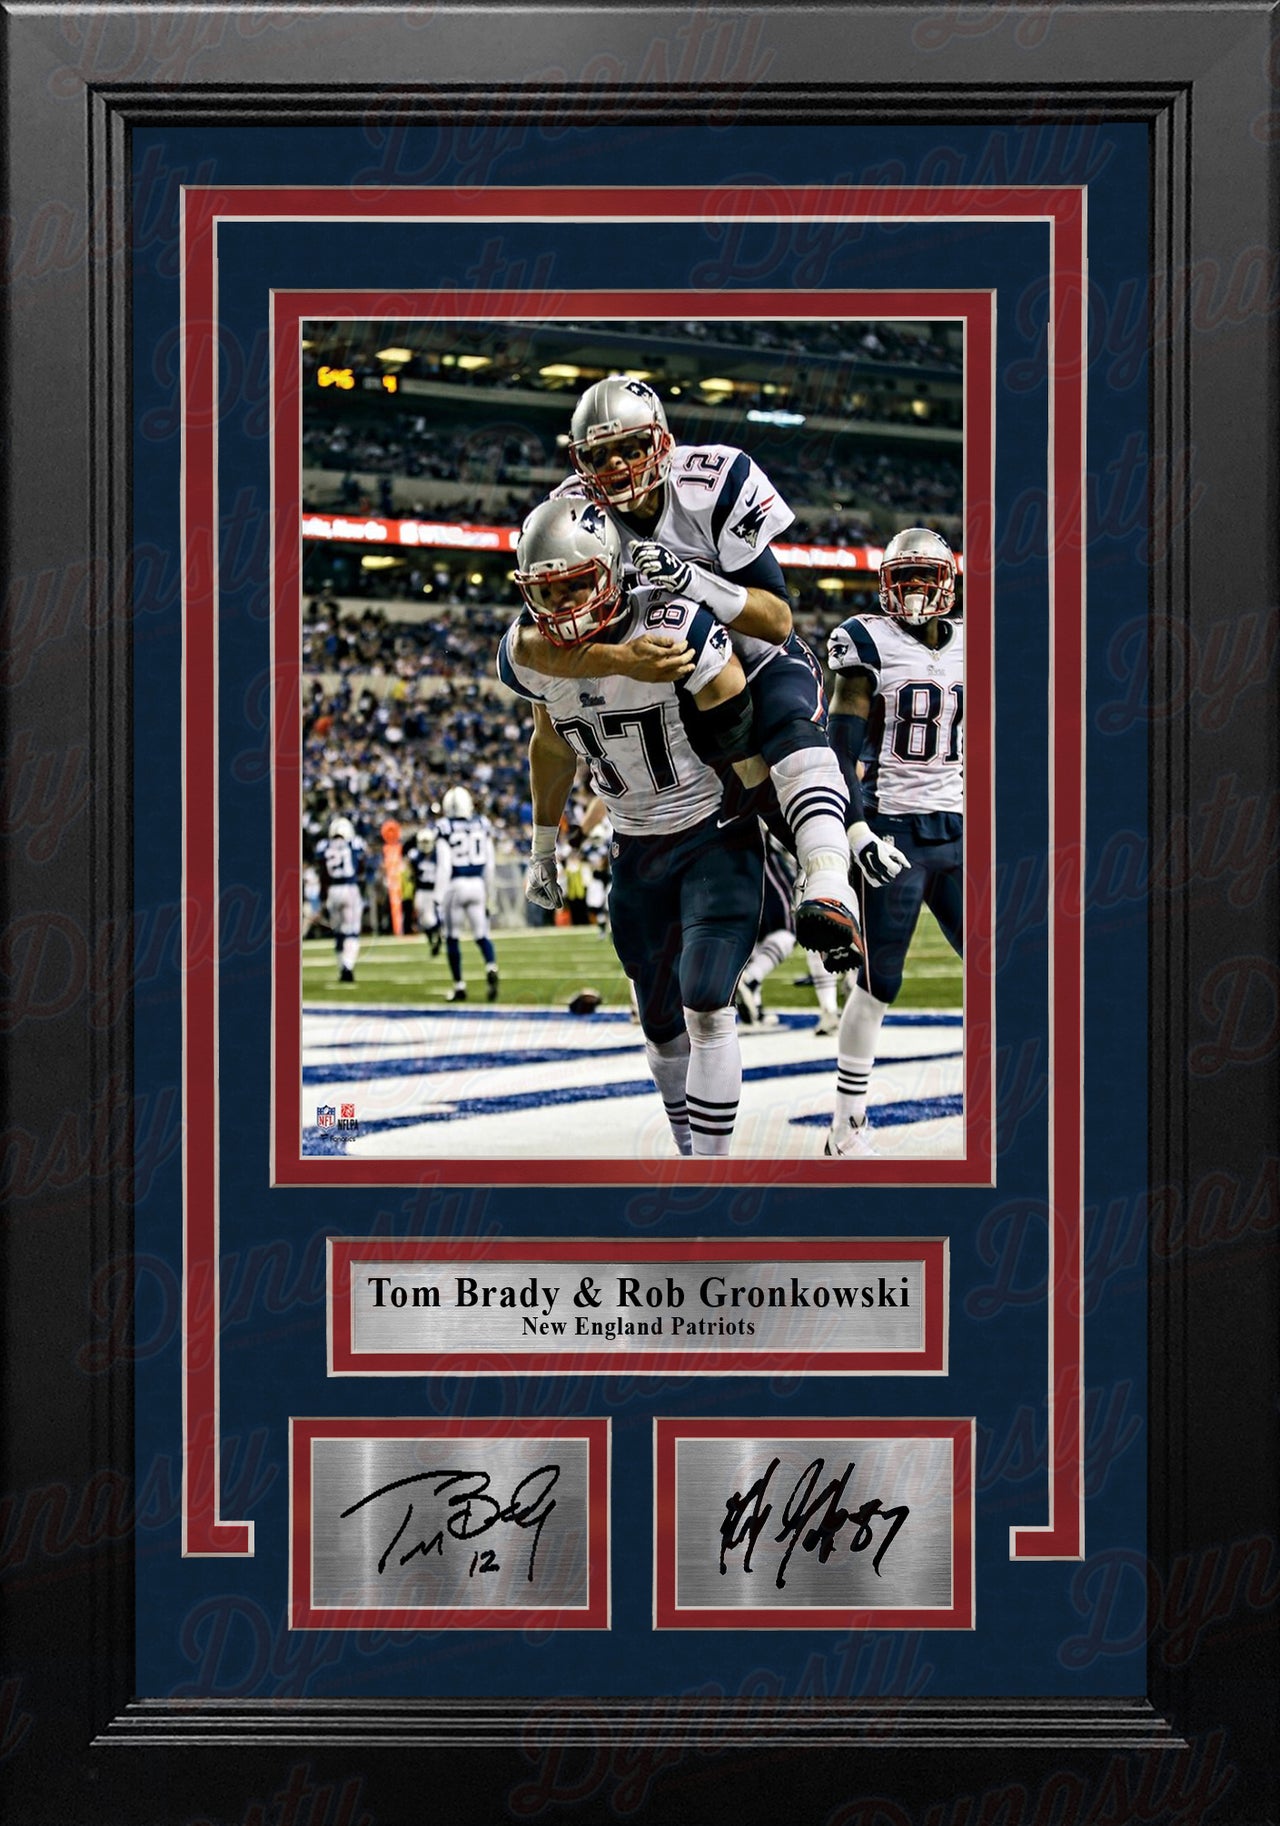 Tom Brady & Rob Gronkowski New England Patriots 8x10 Framed Football Photo with Engraved Autographs - Dynasty Sports & Framing 